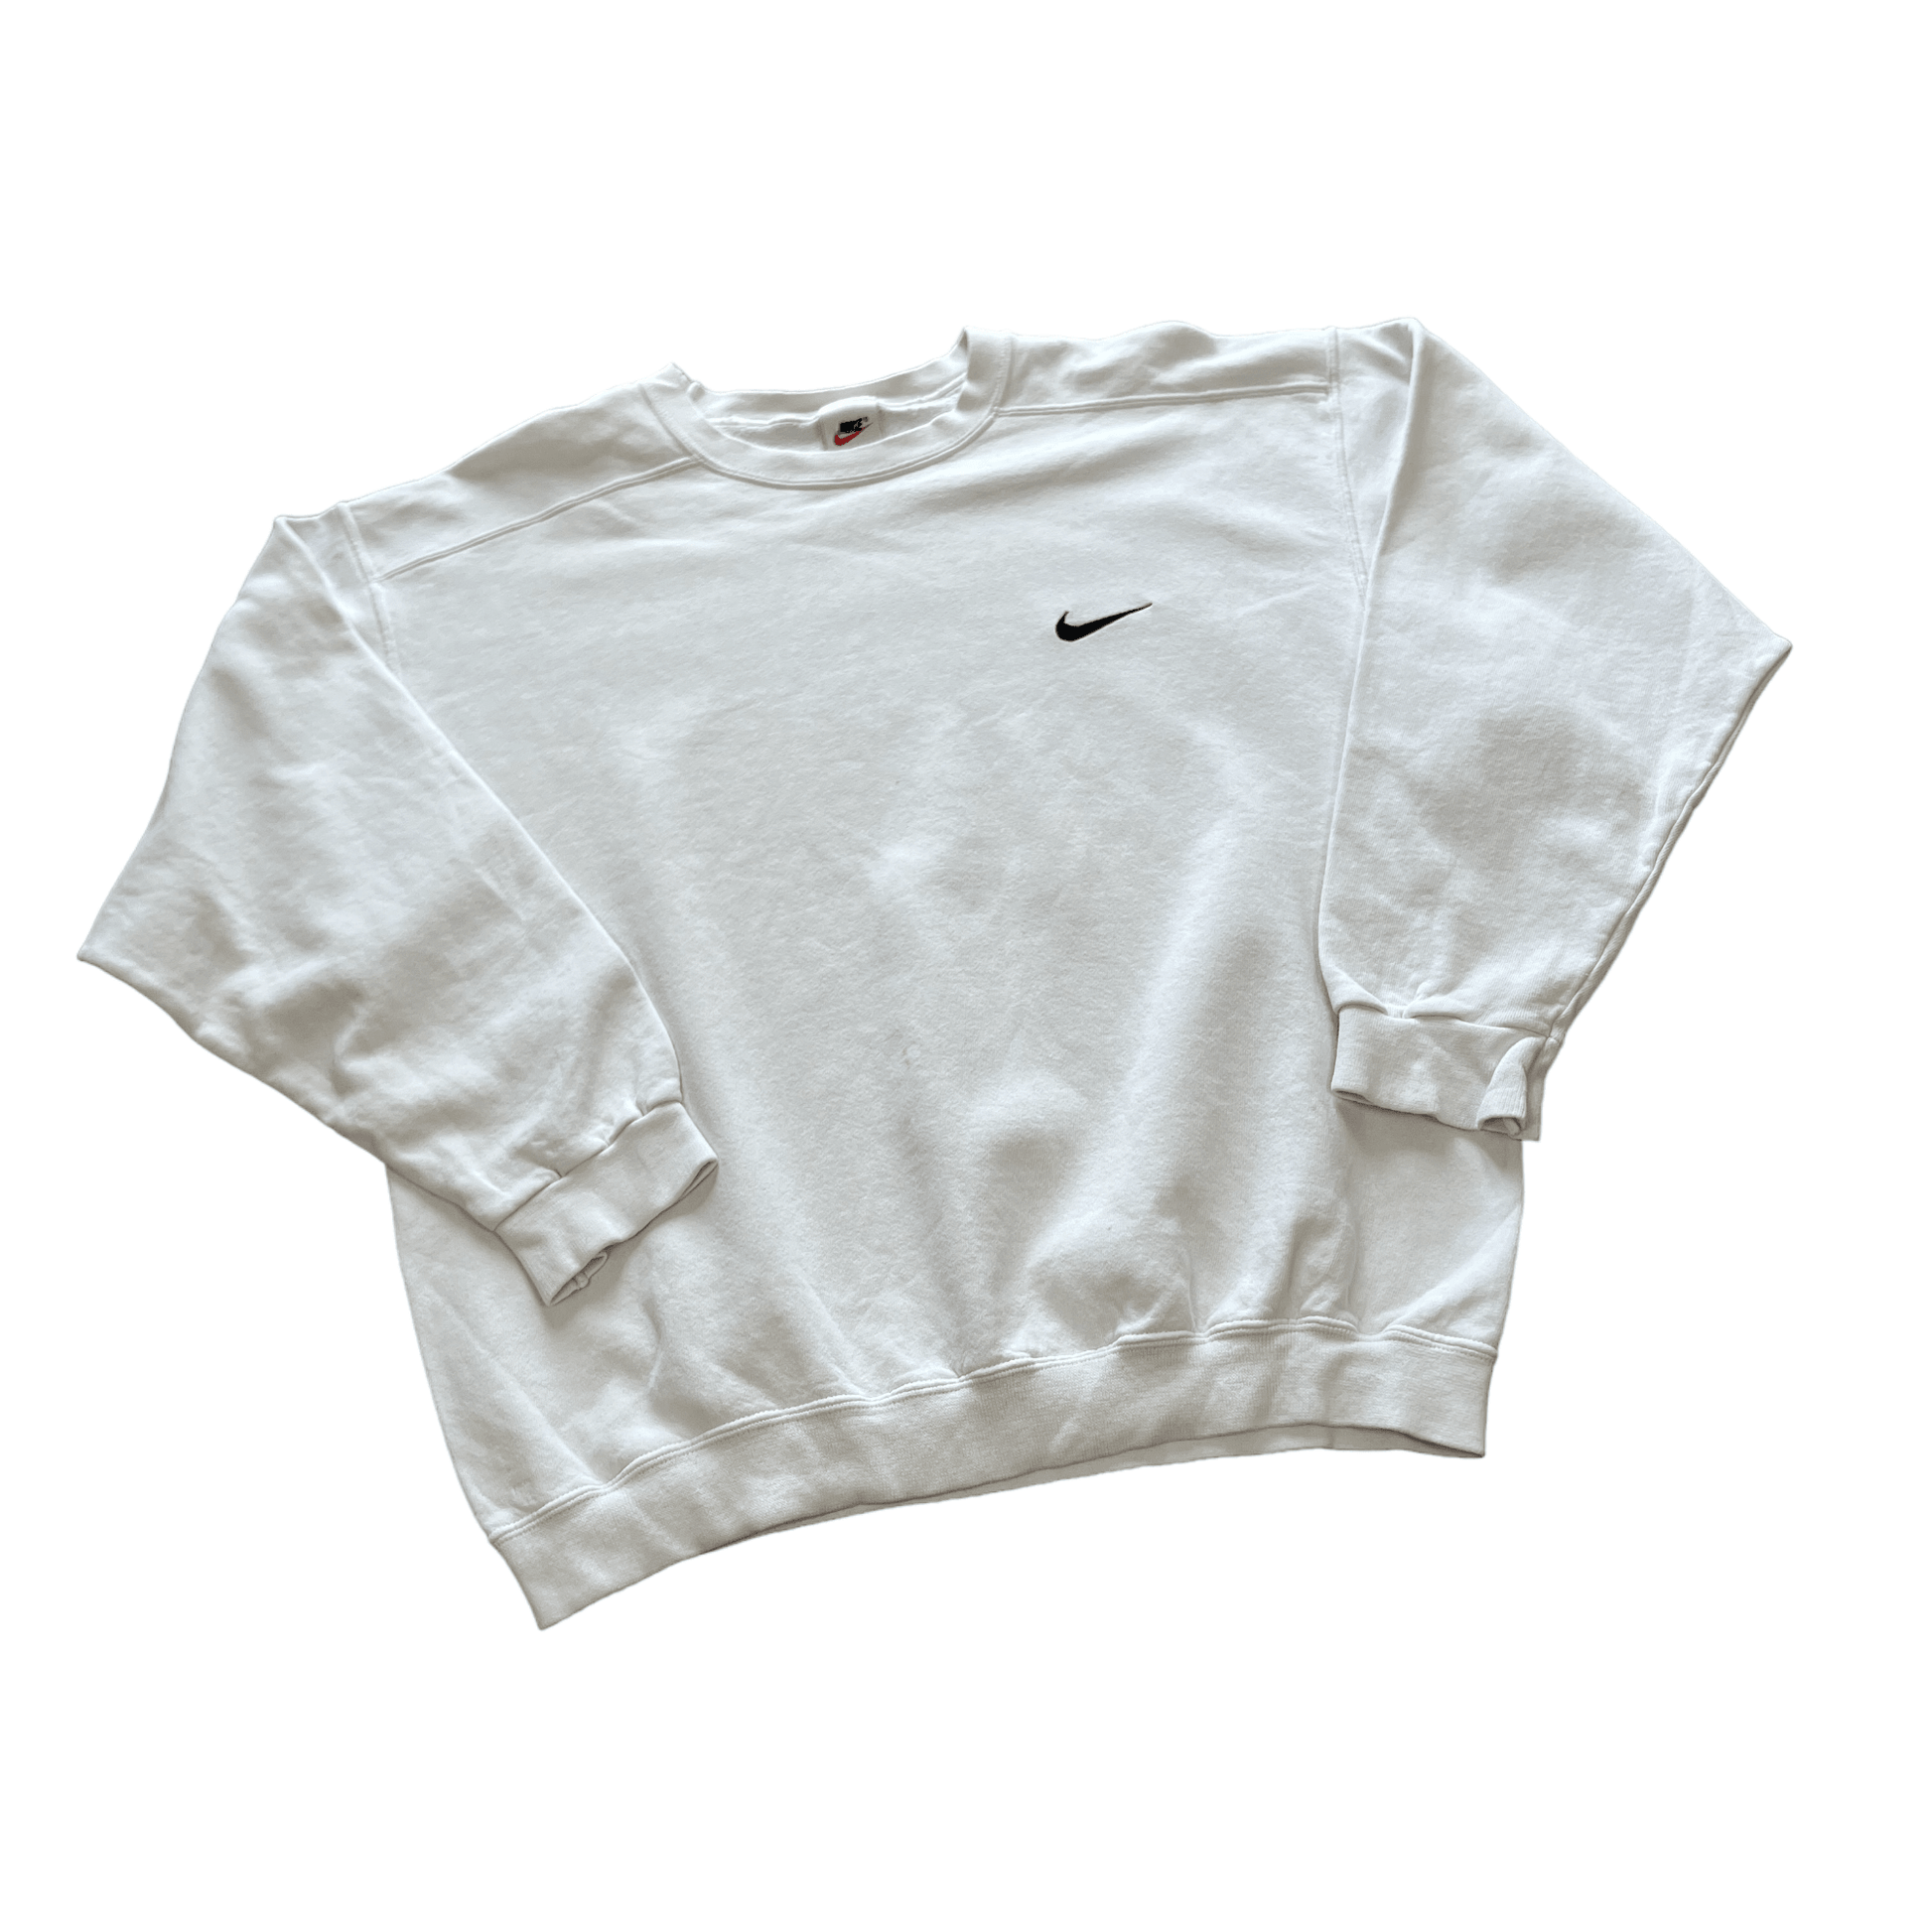 Vintage 90s White Nike Sweatshirt - Medium - The Streetwear Studio